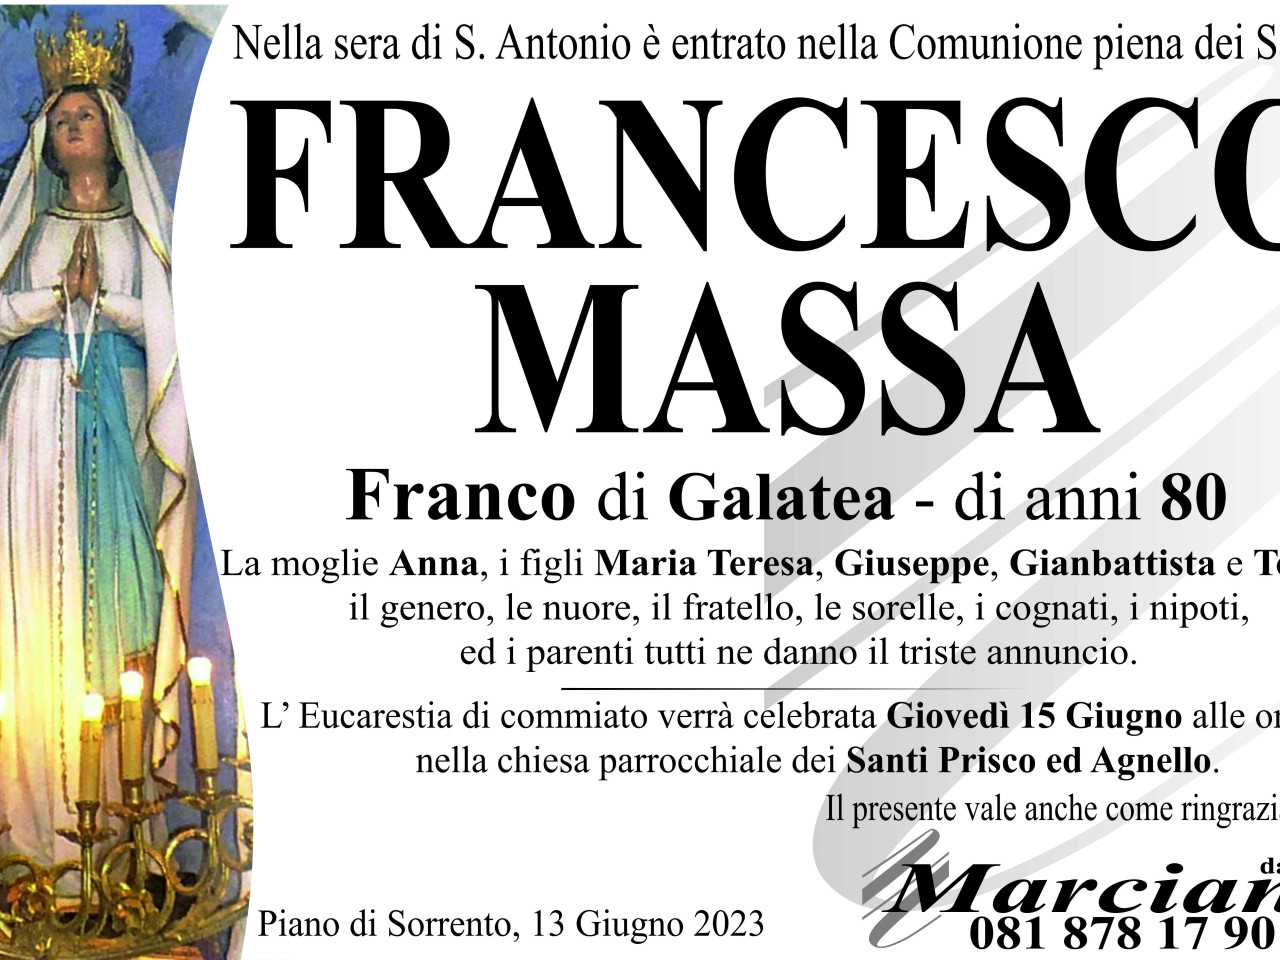 Francesco Massa